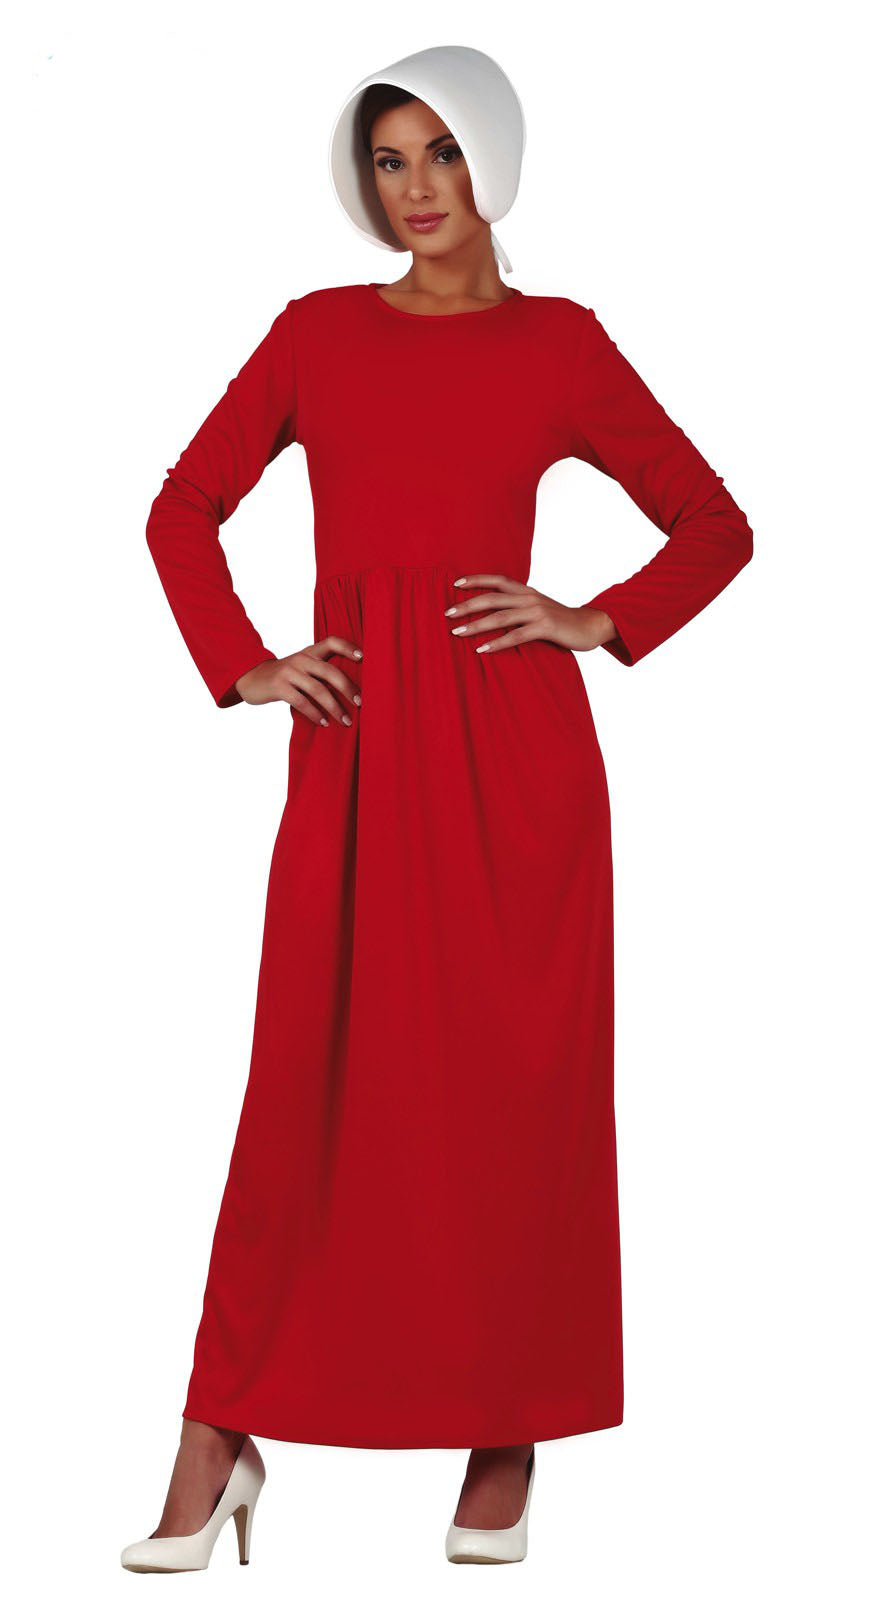 Red Modesty Handmaids Tale Ladies Costume